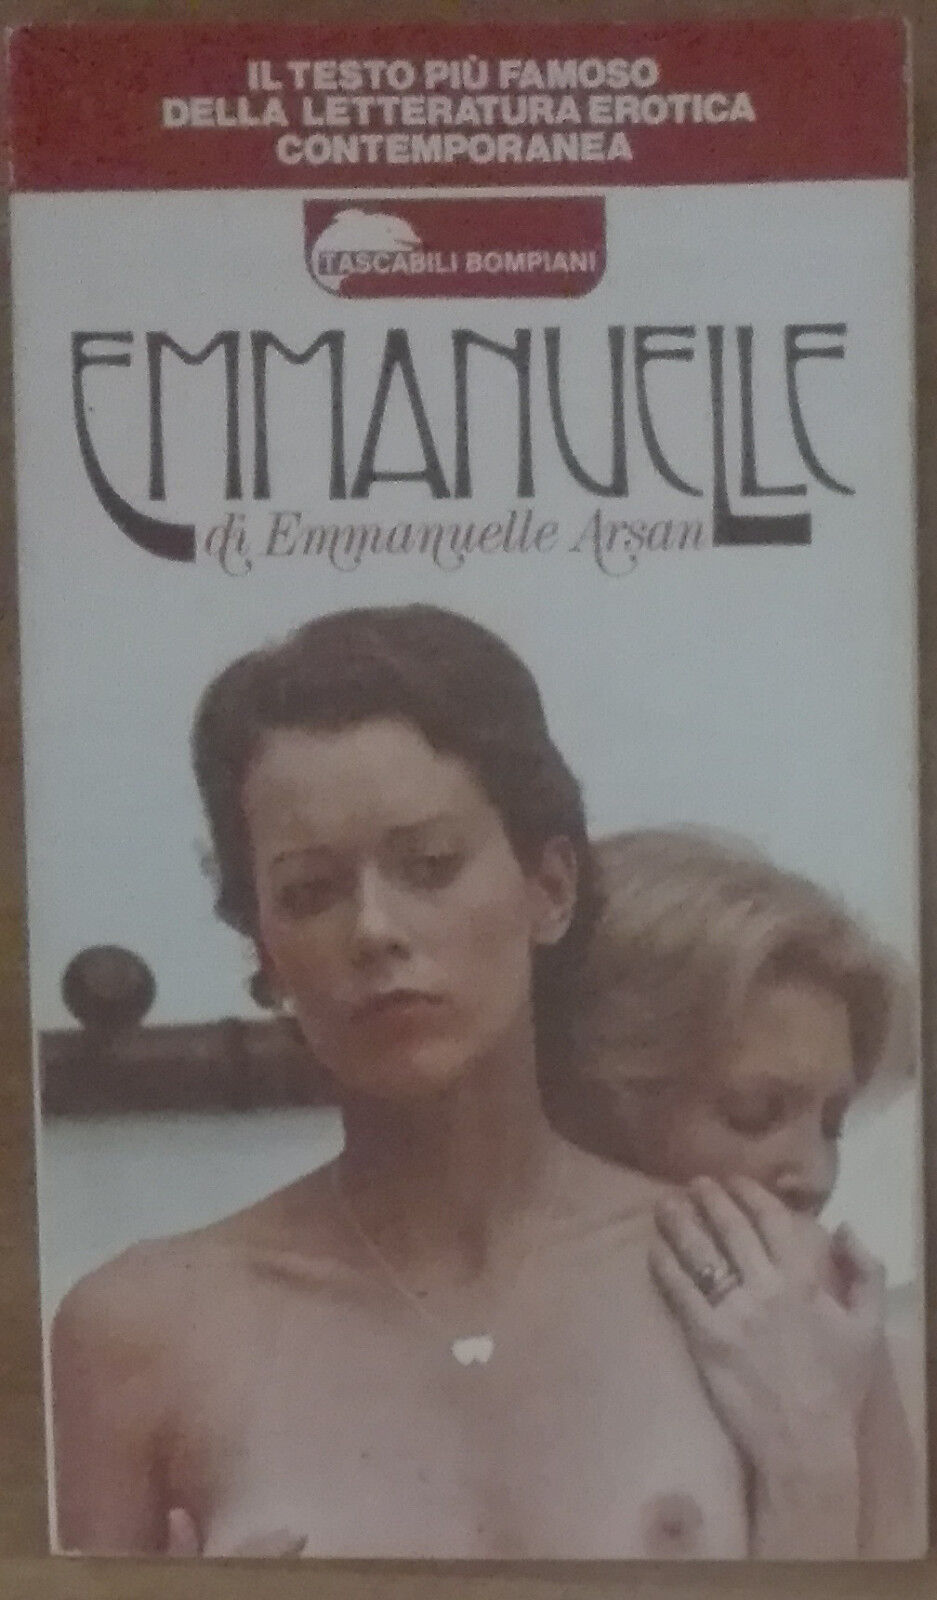 Emmanuelle - Emmanuelle Arsan - Bompiani,1979 - A